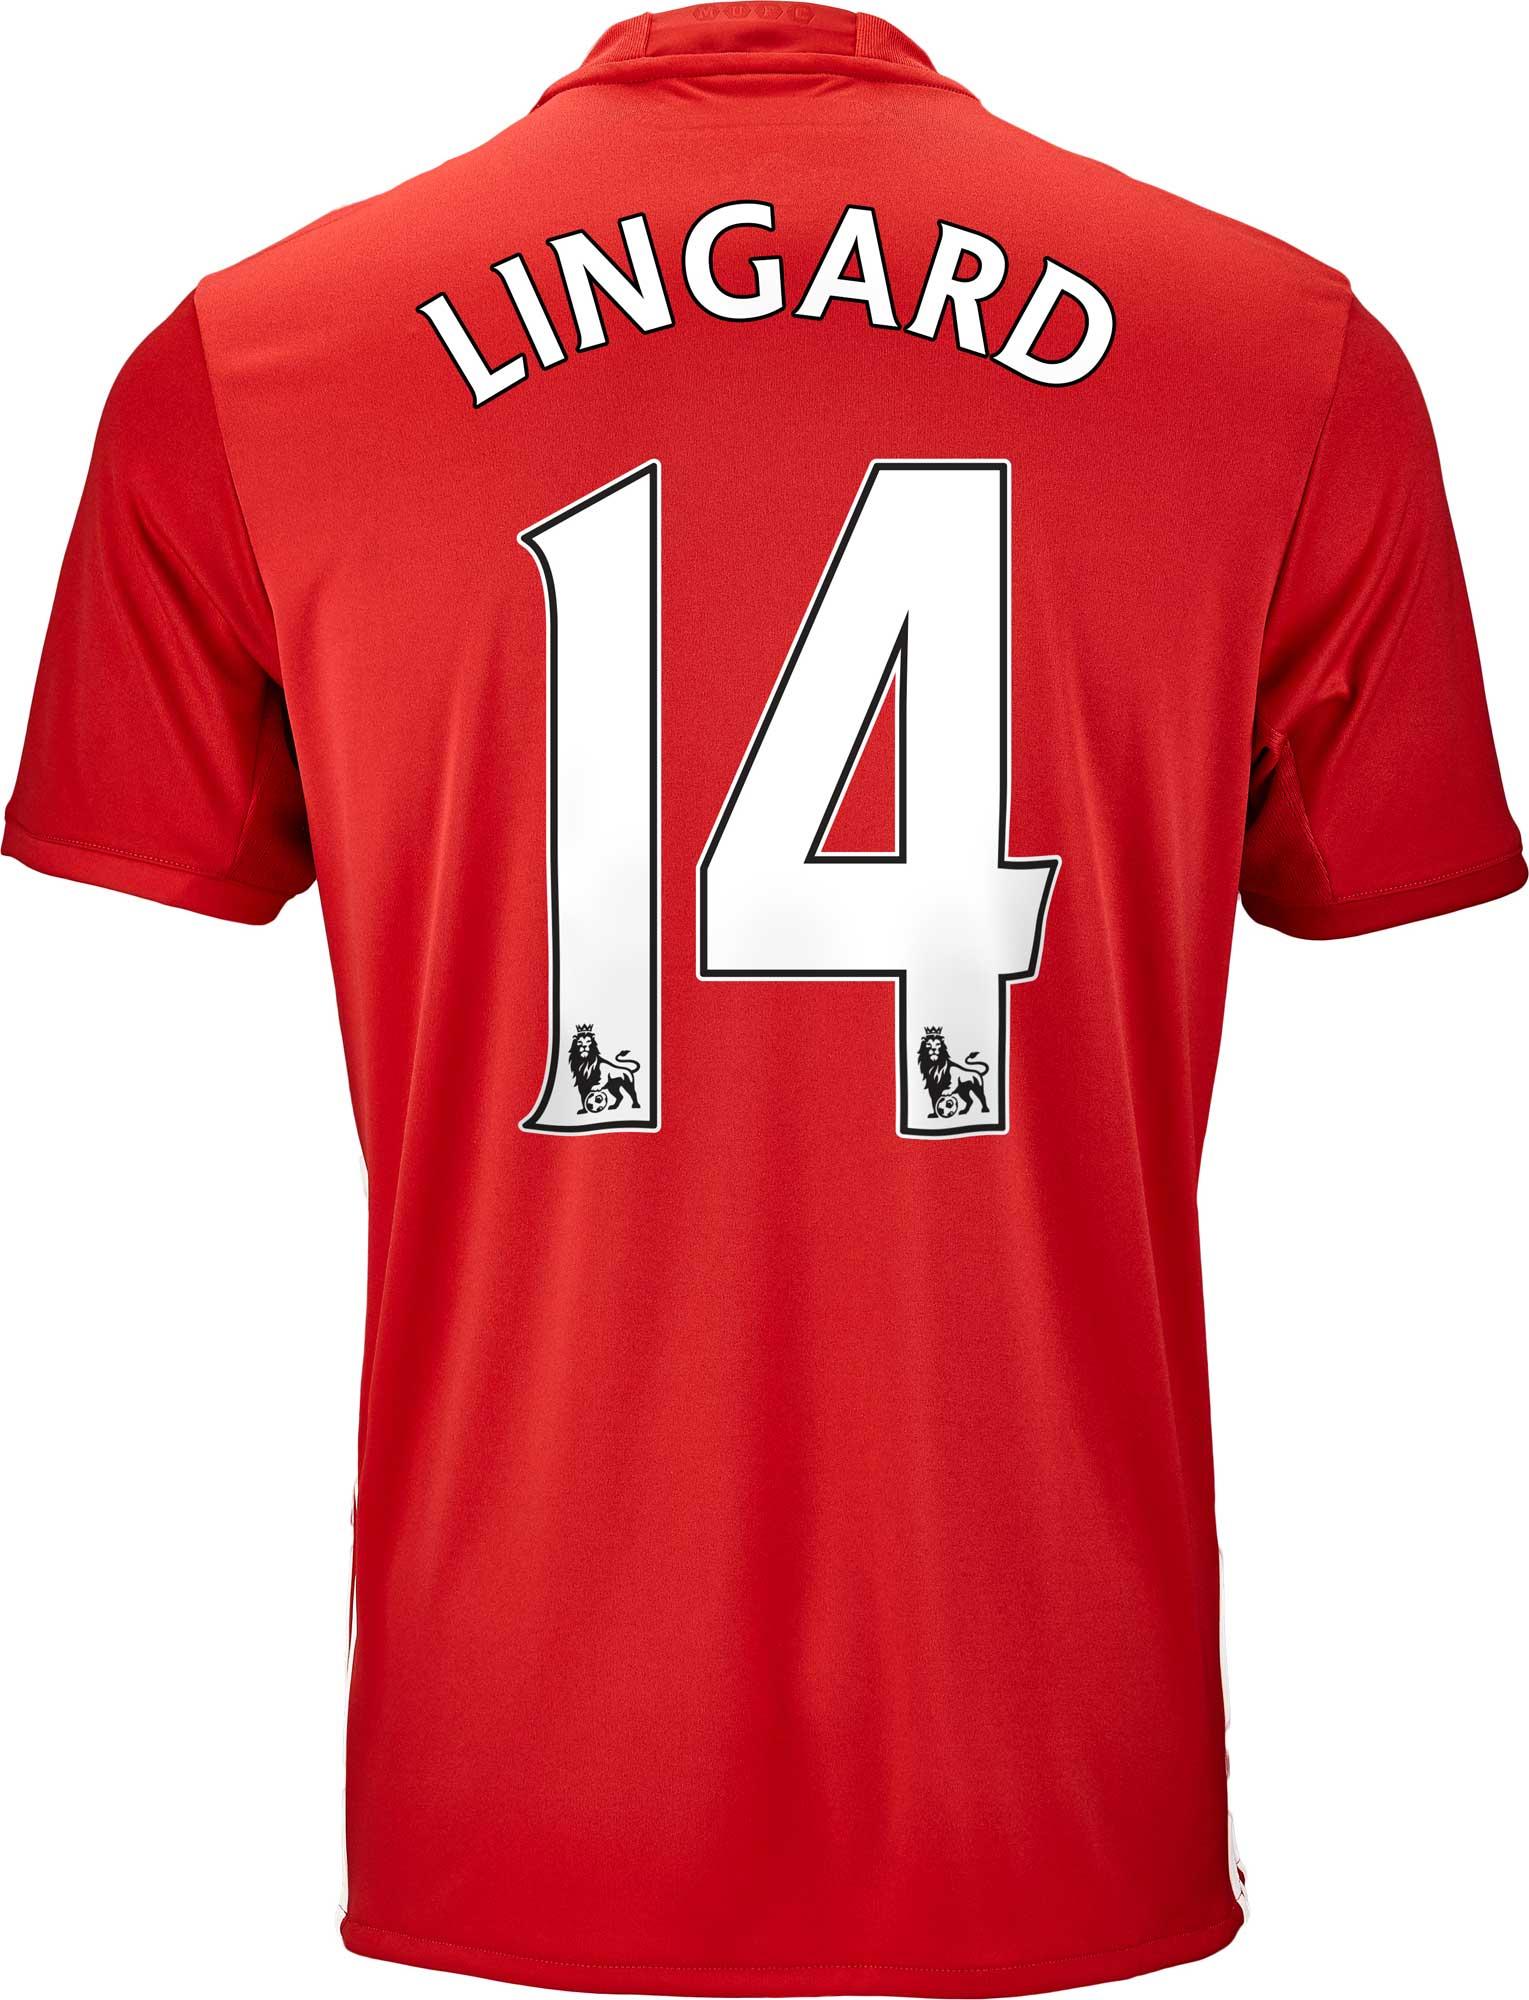 adidas Lingard Manchester United Jersey - 2016 Man United Jerseys